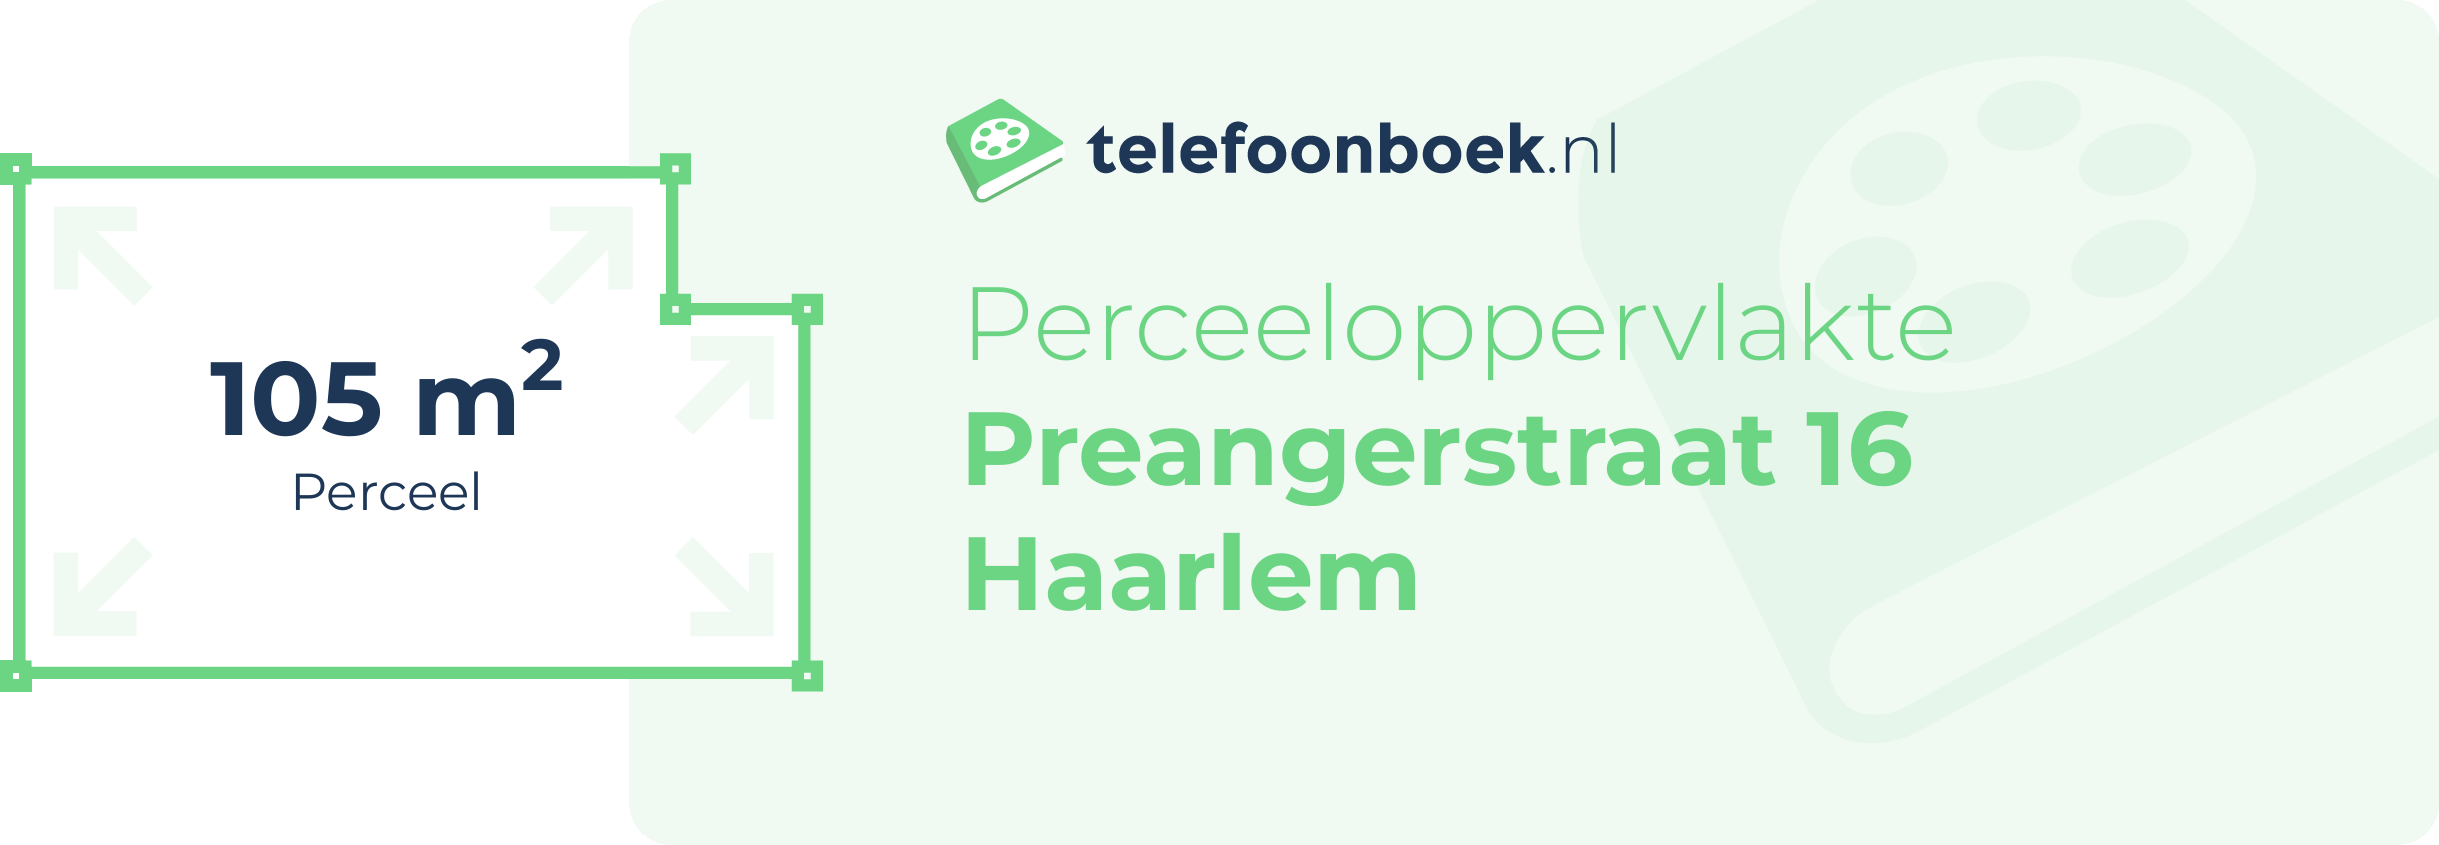 Perceeloppervlakte Preangerstraat 16 Haarlem